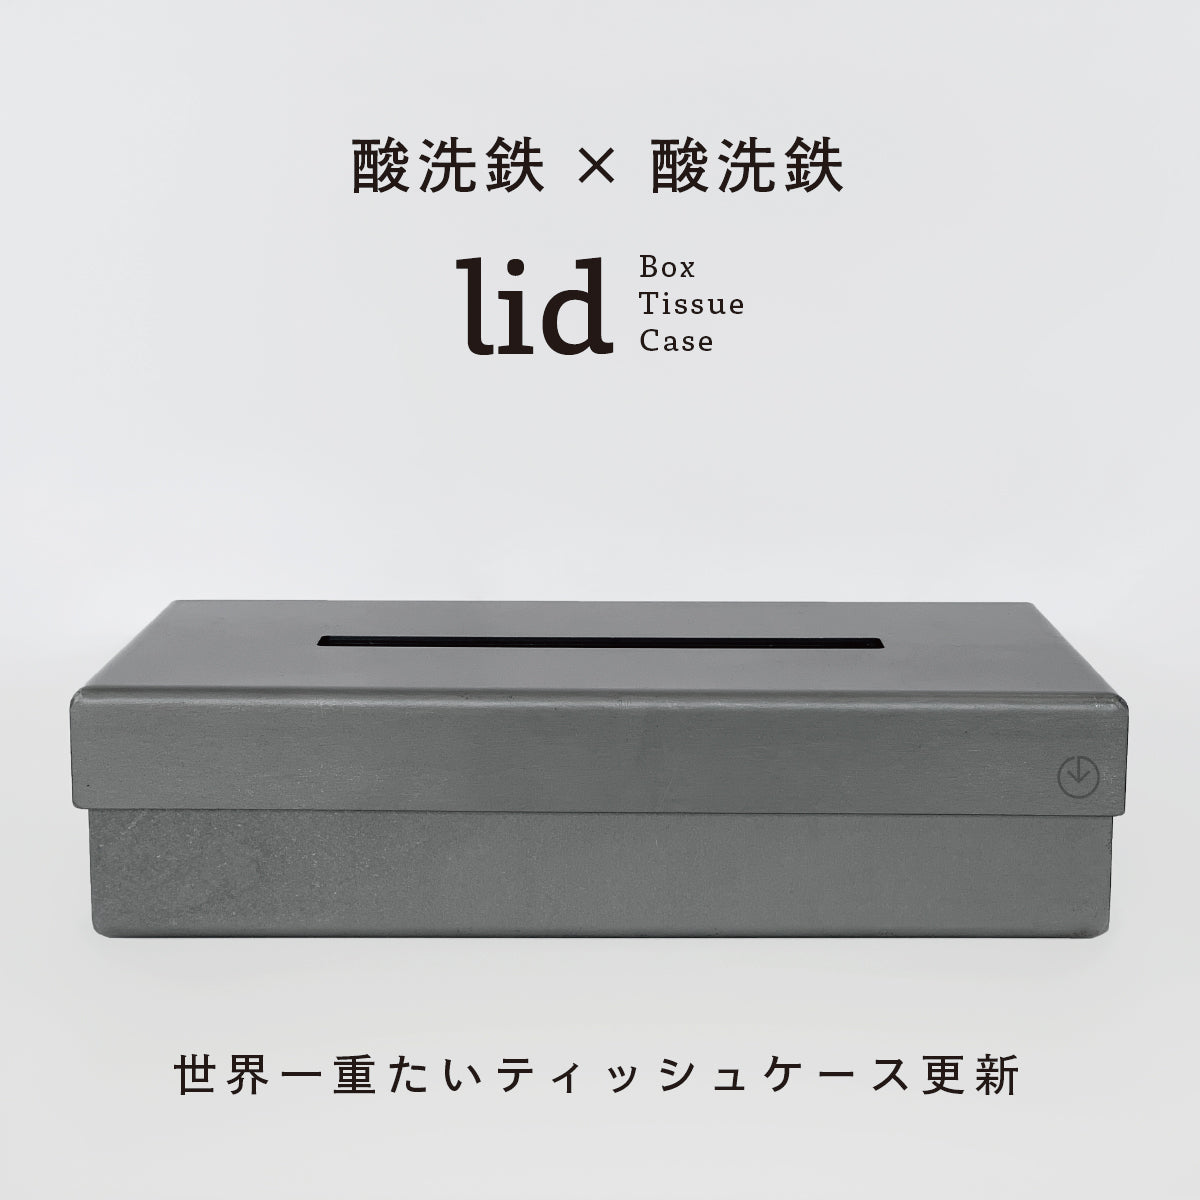 lid Box Tissue Case 酸洗鉄×酸洗鉄